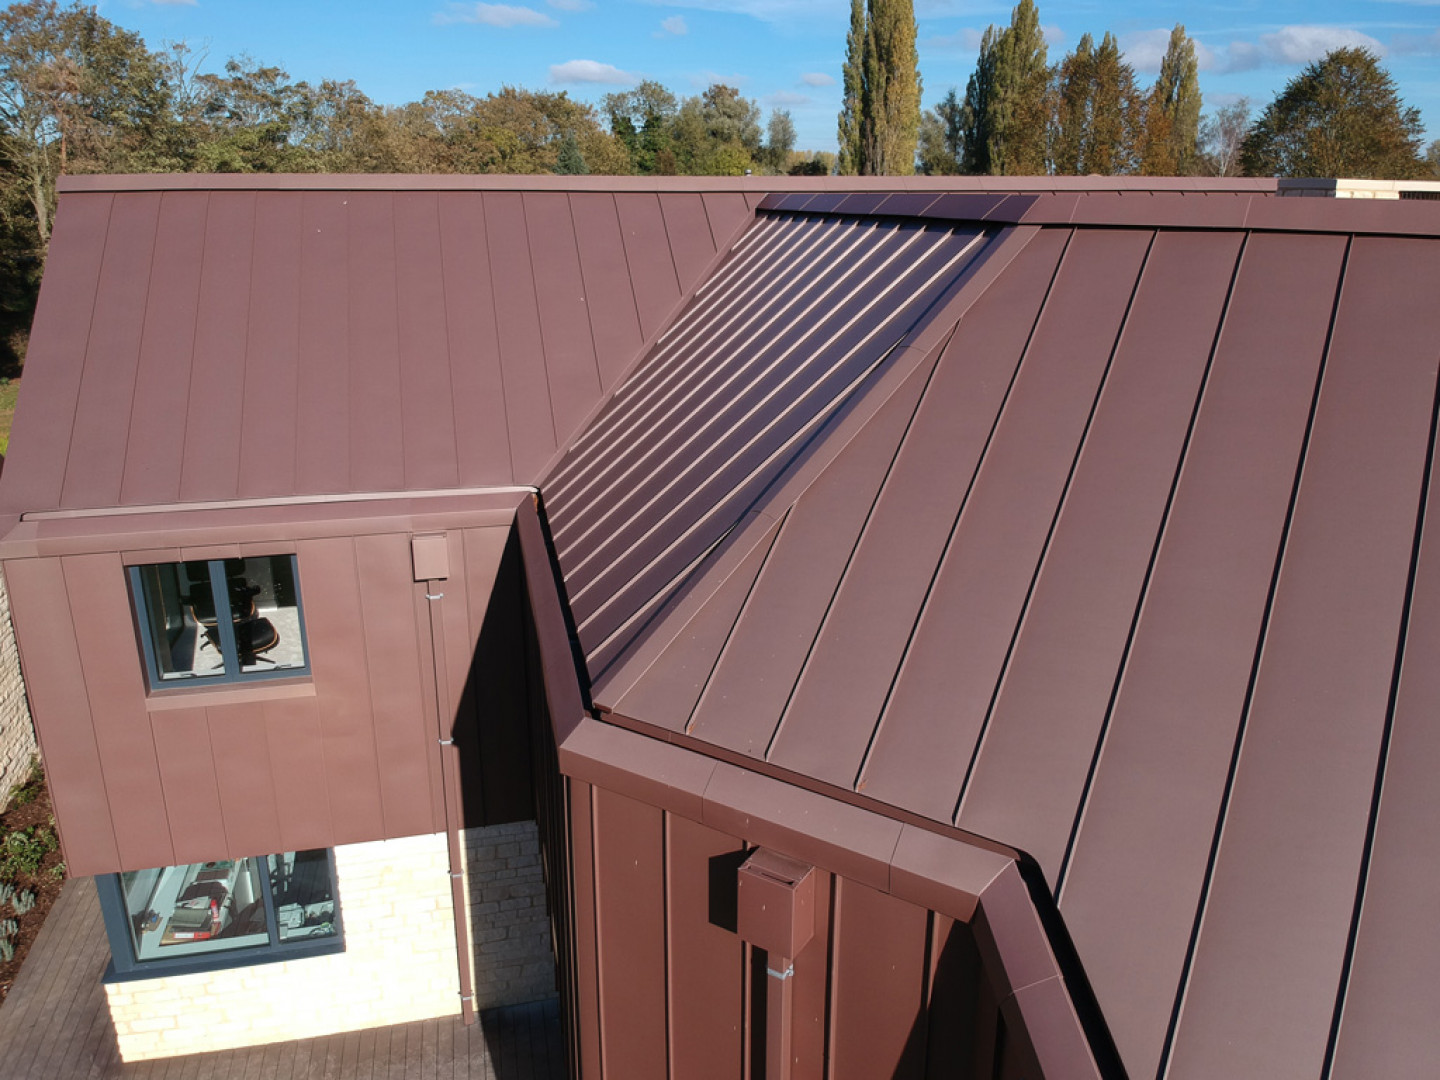 Standing Seam Zinc Roof Build Up Options,SIG Design & Technology